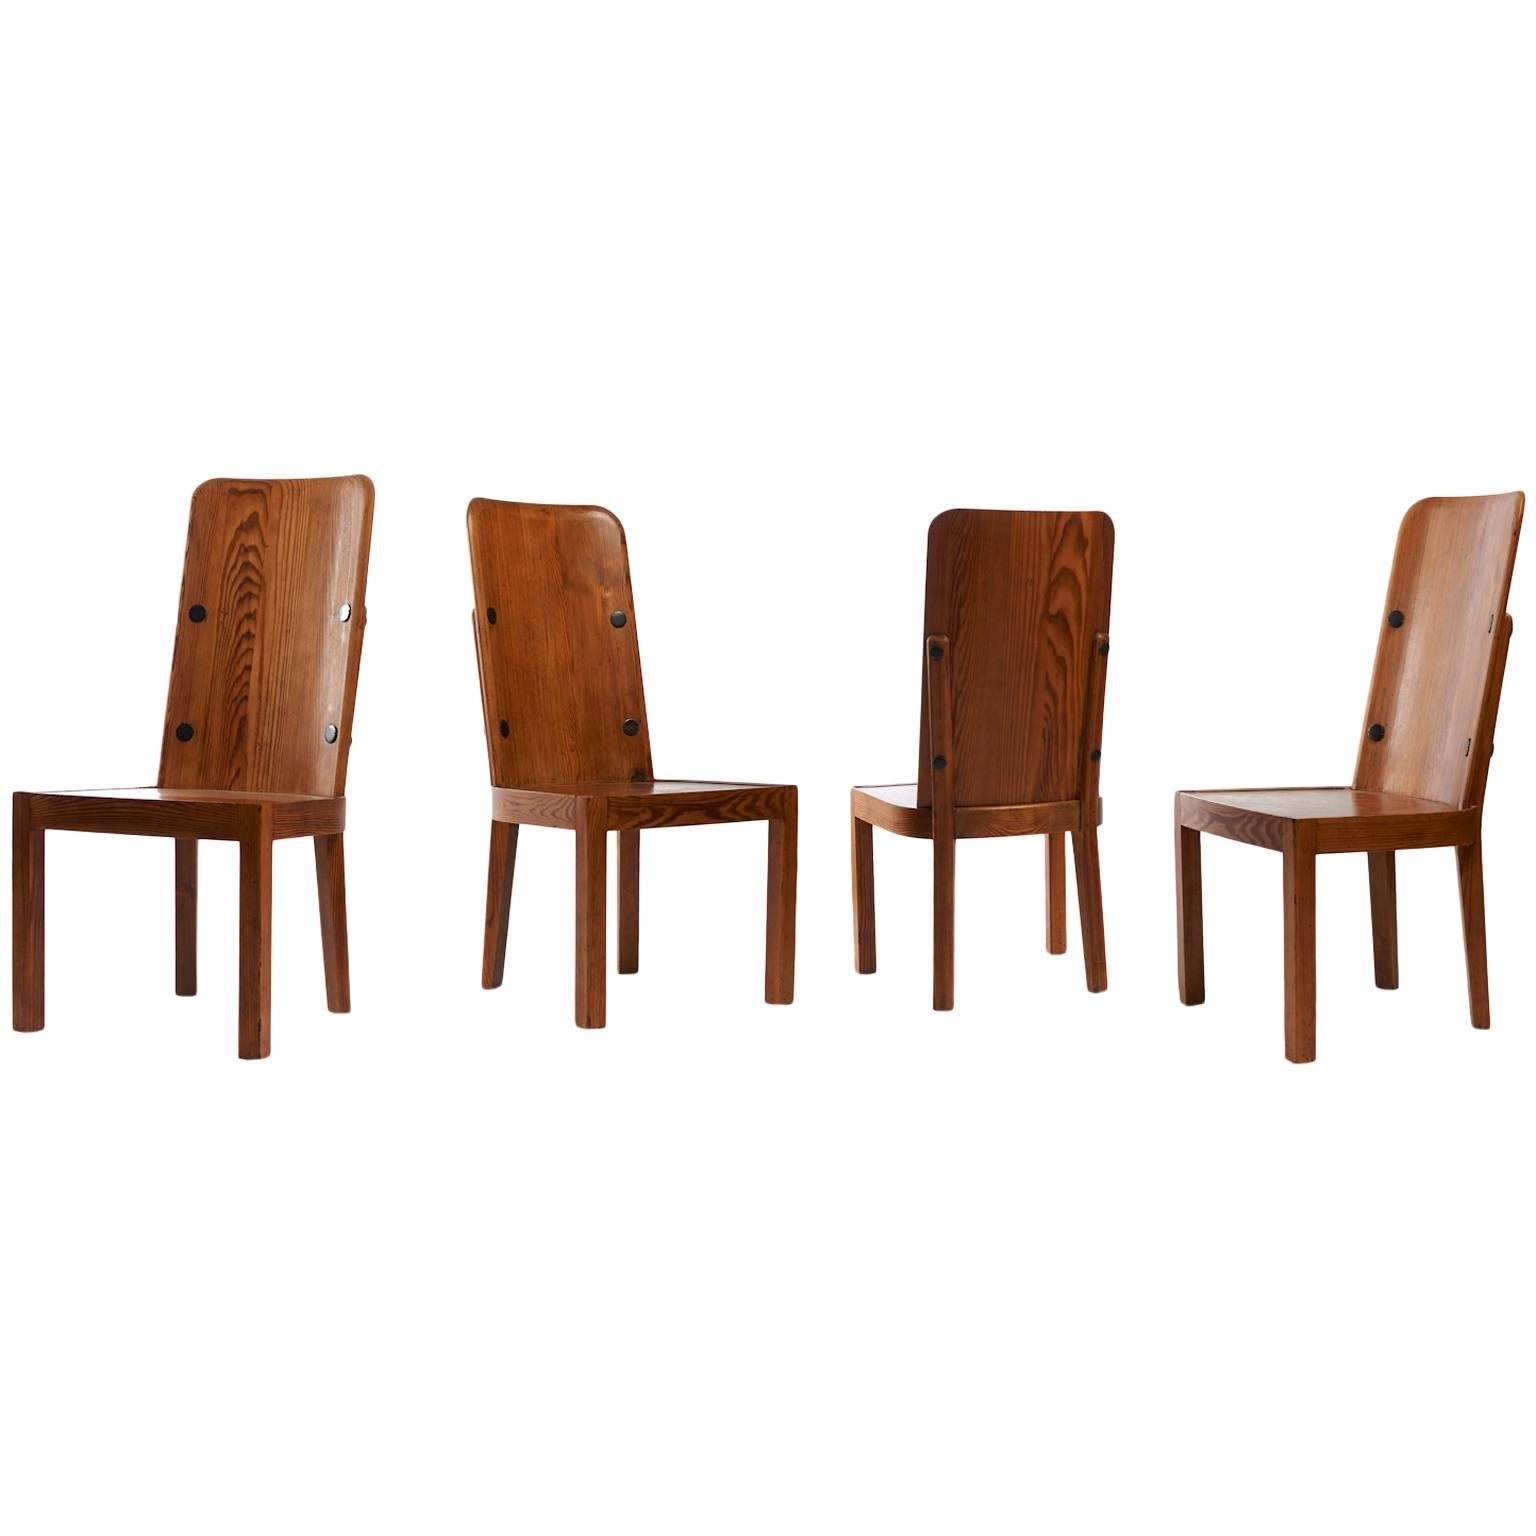 Axel Einar Hjorth Dining Chairs